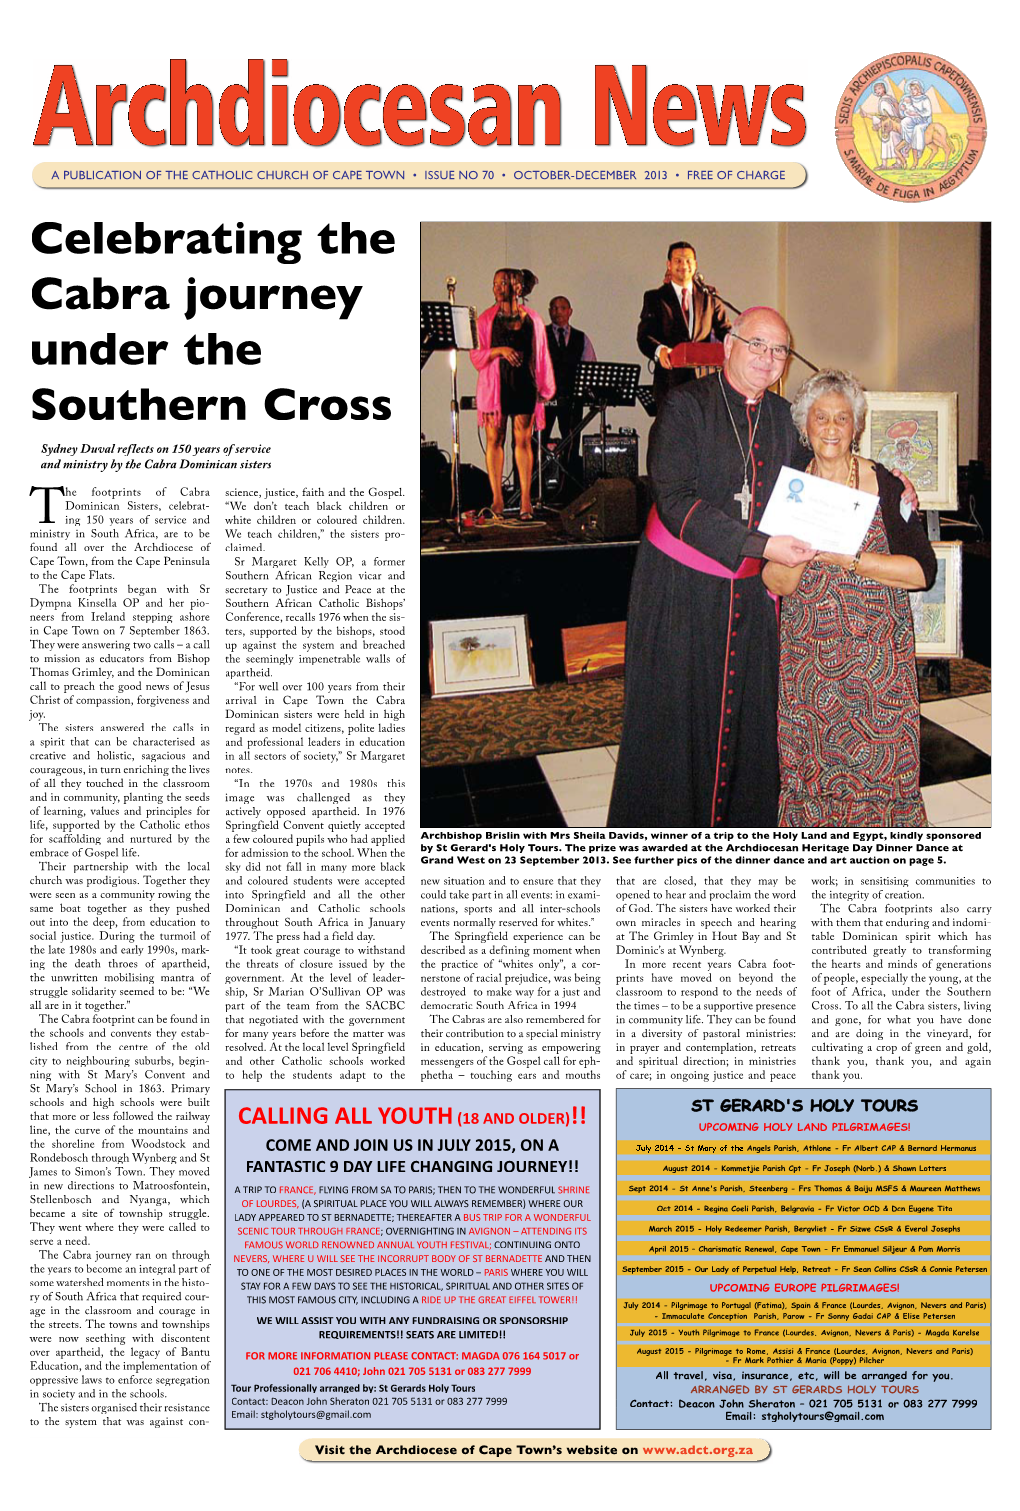 Celebrating the Cabra Journey Under the Southern Cross